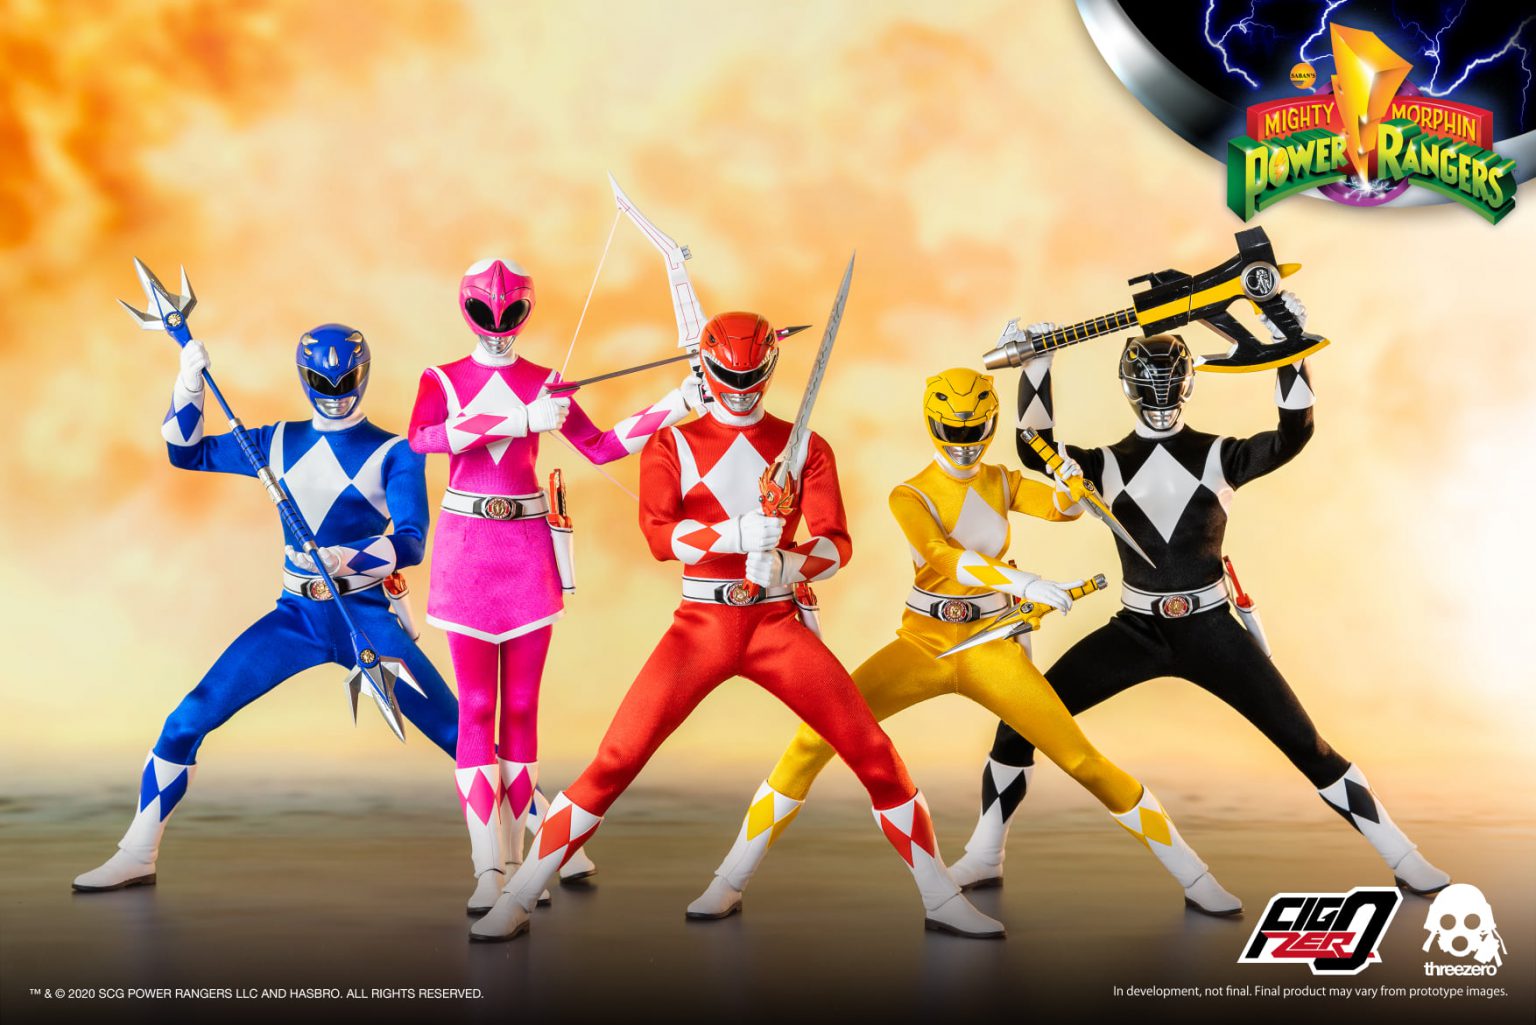 Mighty Morphin Power Rangers.